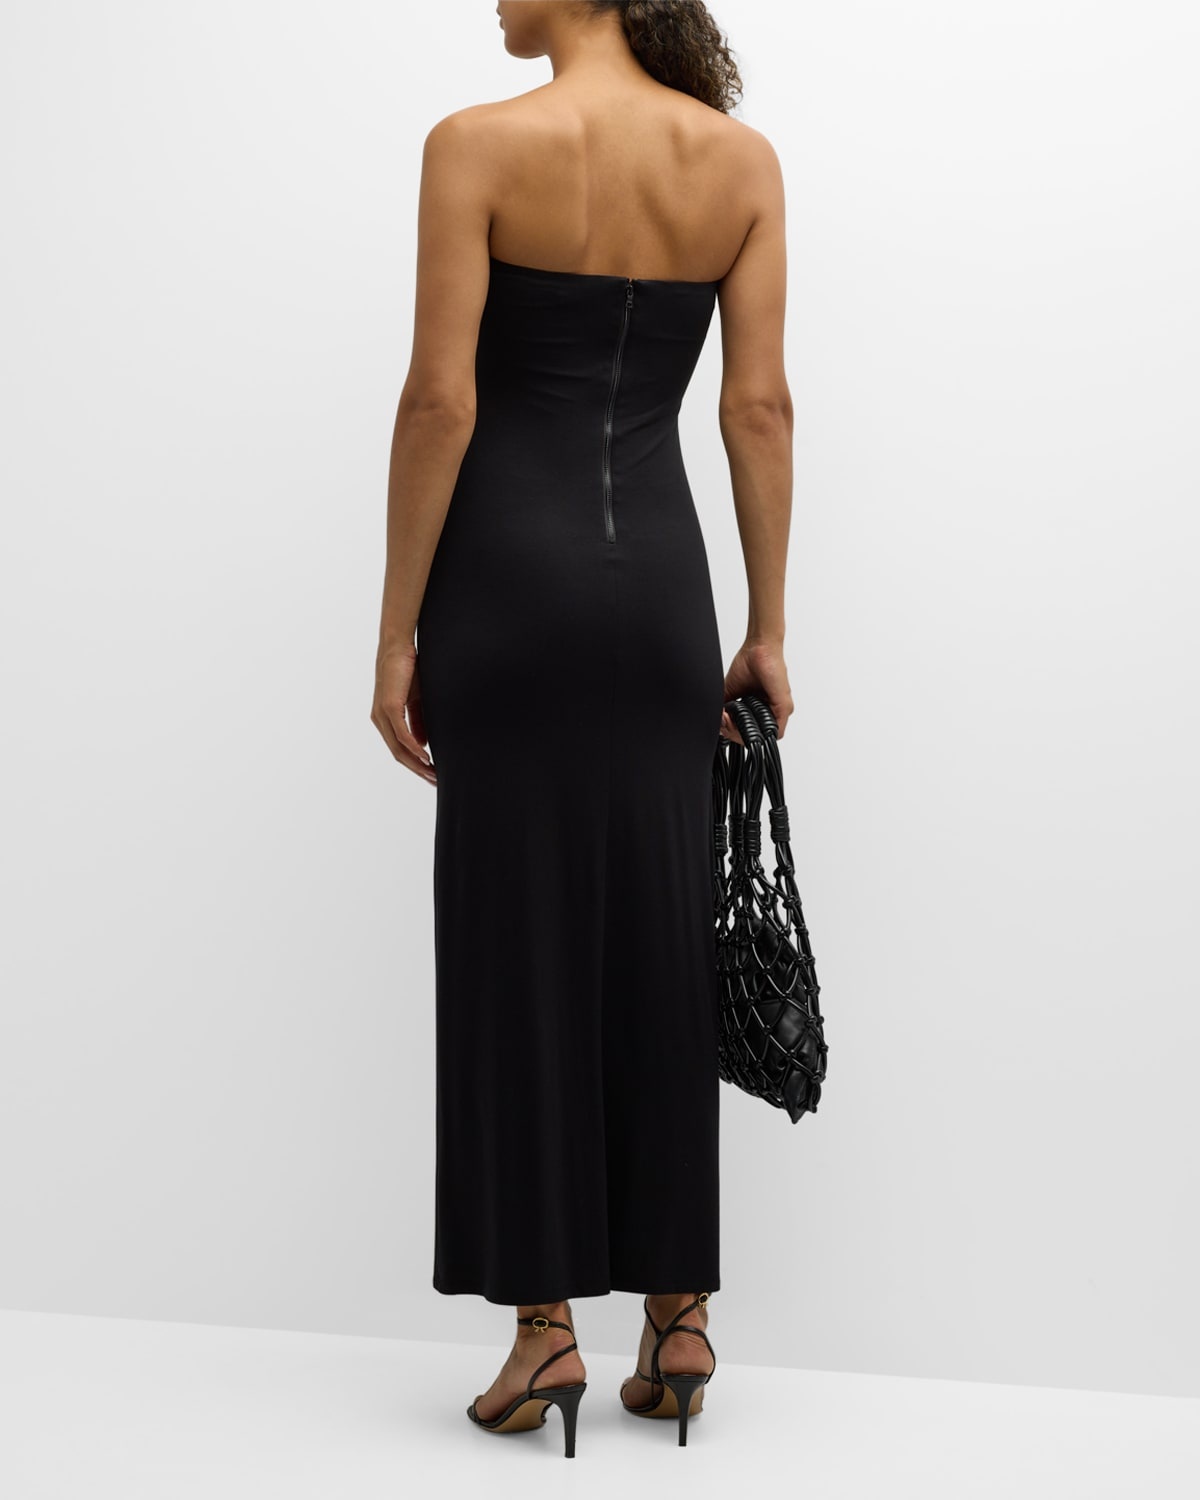 Delora Strapless Midi Dress - 4